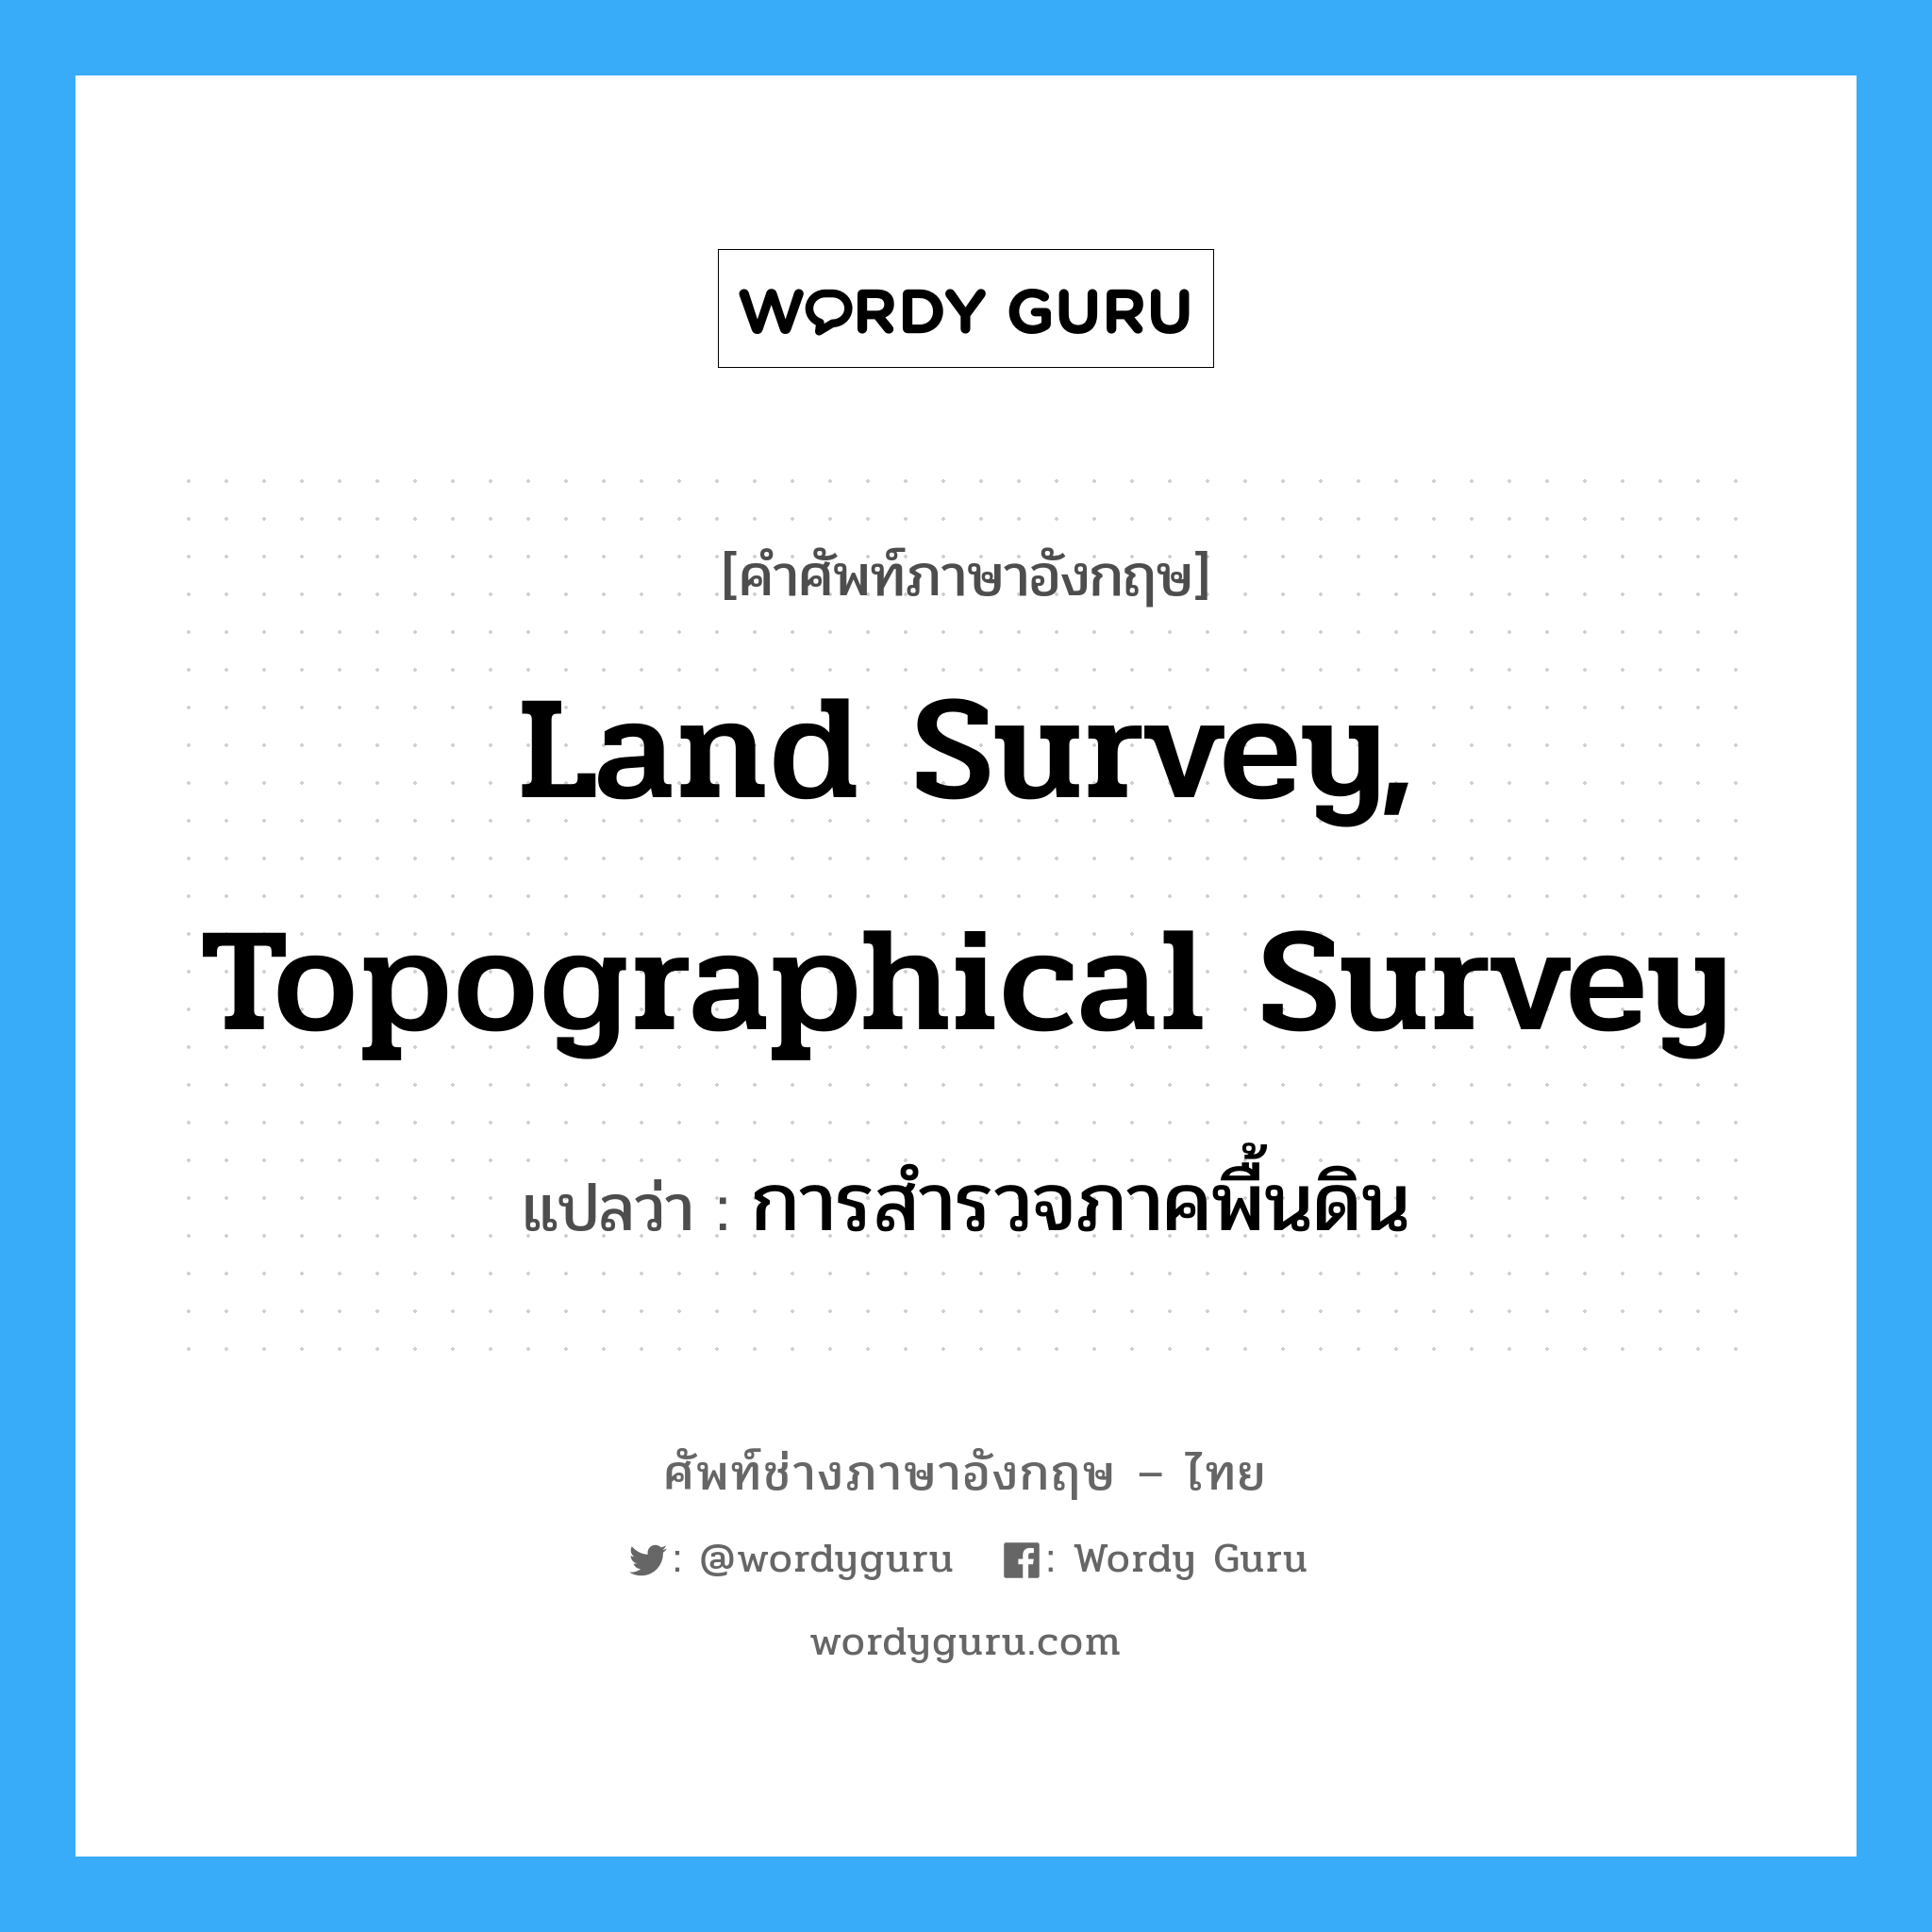 land survey, topographical survey แปลว่า?, คำศัพท์ช่างภาษาอังกฤษ - ไทย land survey, topographical survey คำศัพท์ภาษาอังกฤษ land survey, topographical survey แปลว่า การสำรวจภาคพื้นดิน